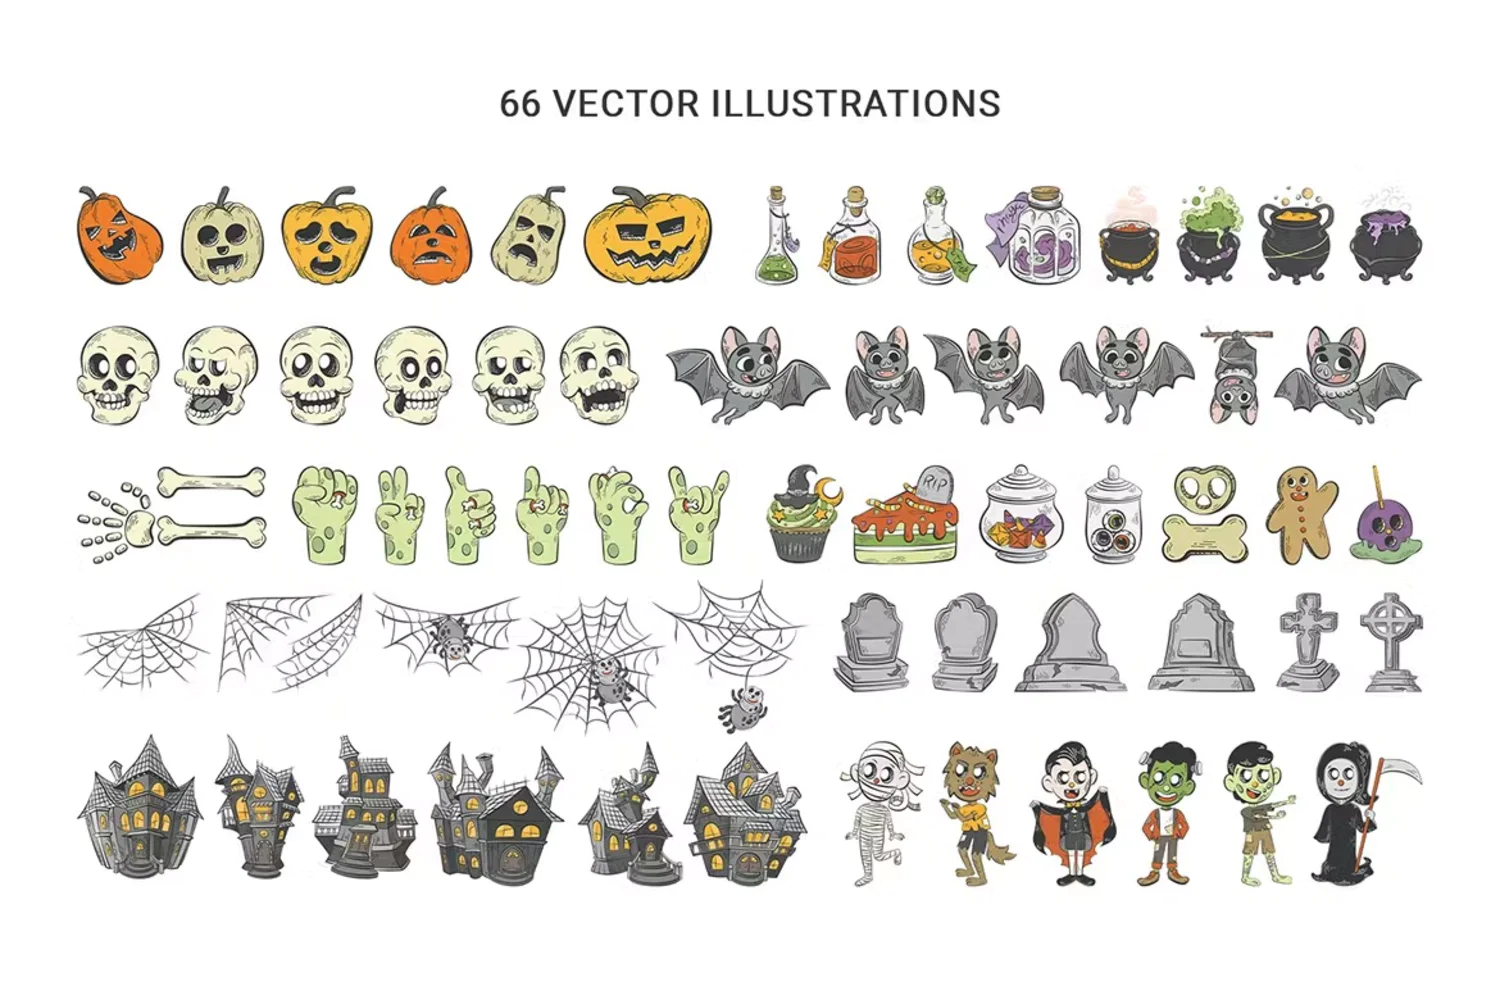 5200 创意设计万圣节矢量插图包Vol.2 手绘风格 Halloween Illustrations Pack Vol.2@GOOODME.COM